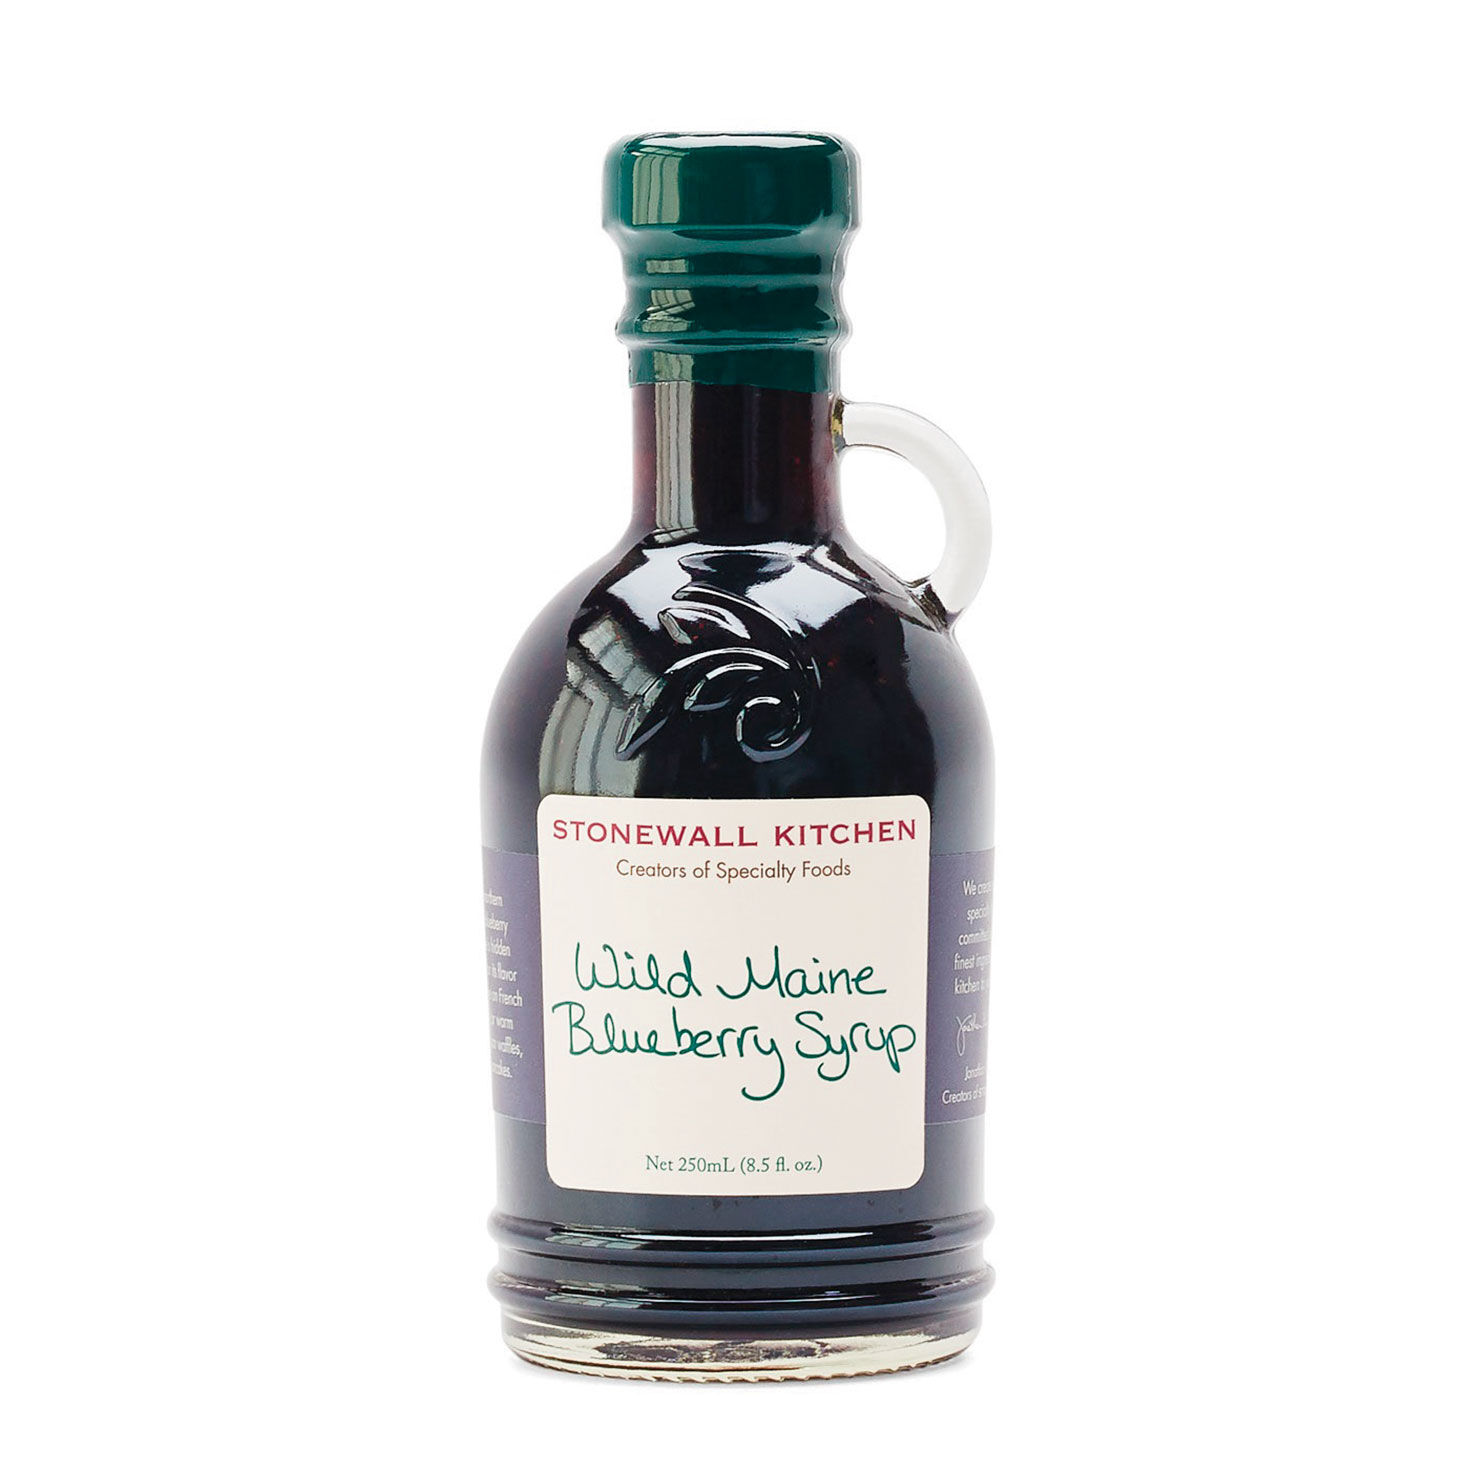 Stonewall Kitchen Wild Maine Blueberry Syrup, 8.5 oz. for only USD 8.95 | Hallmark